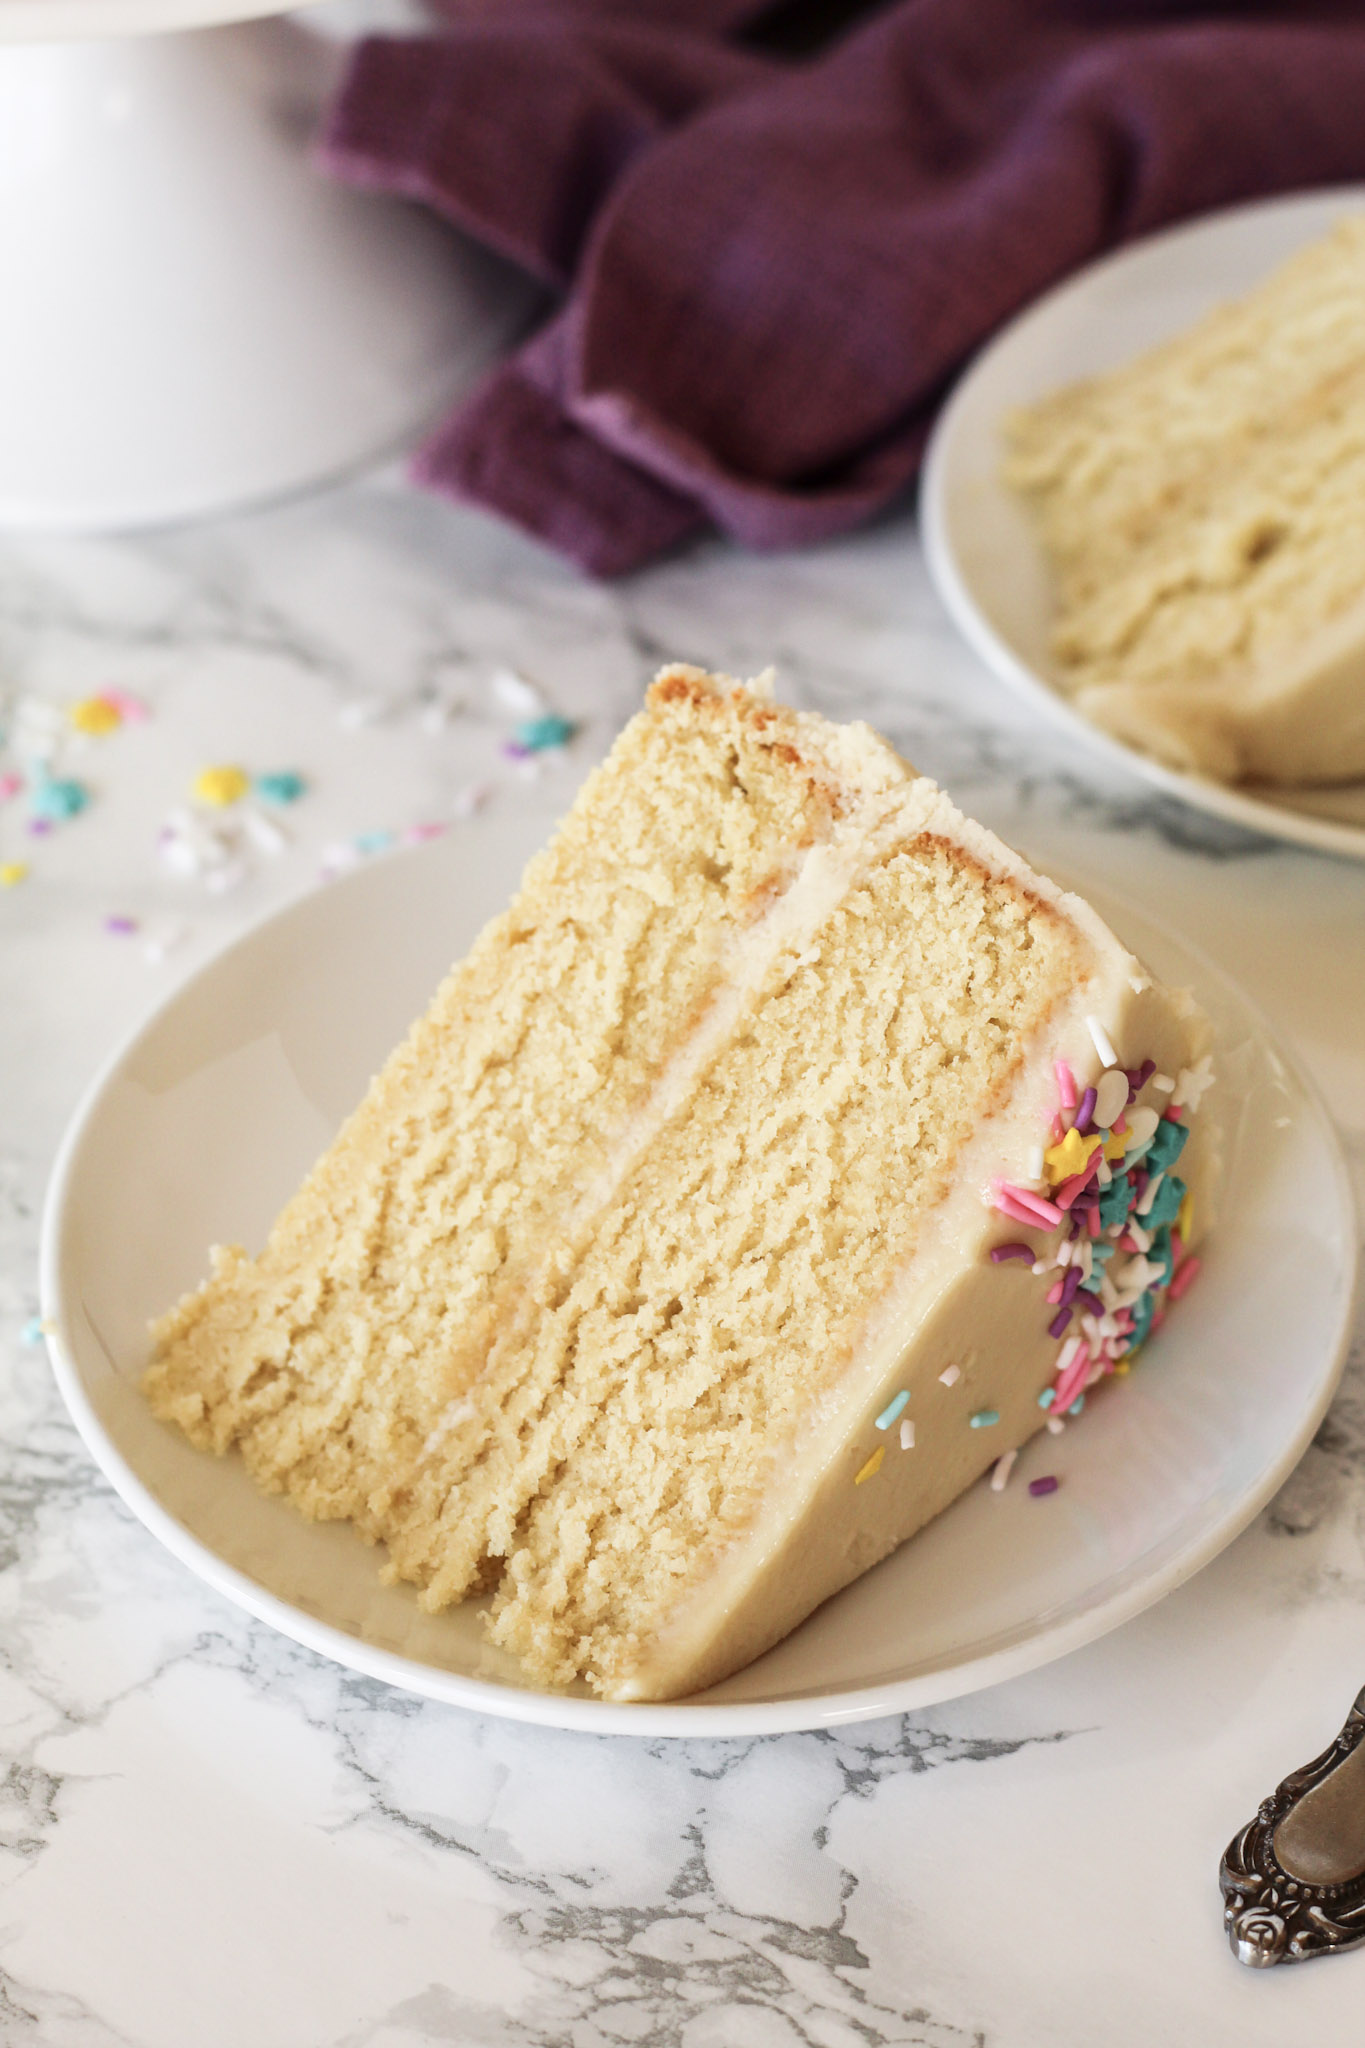 10 Best Yellow Cake with Vanilla Pudding Recipes | Yummly